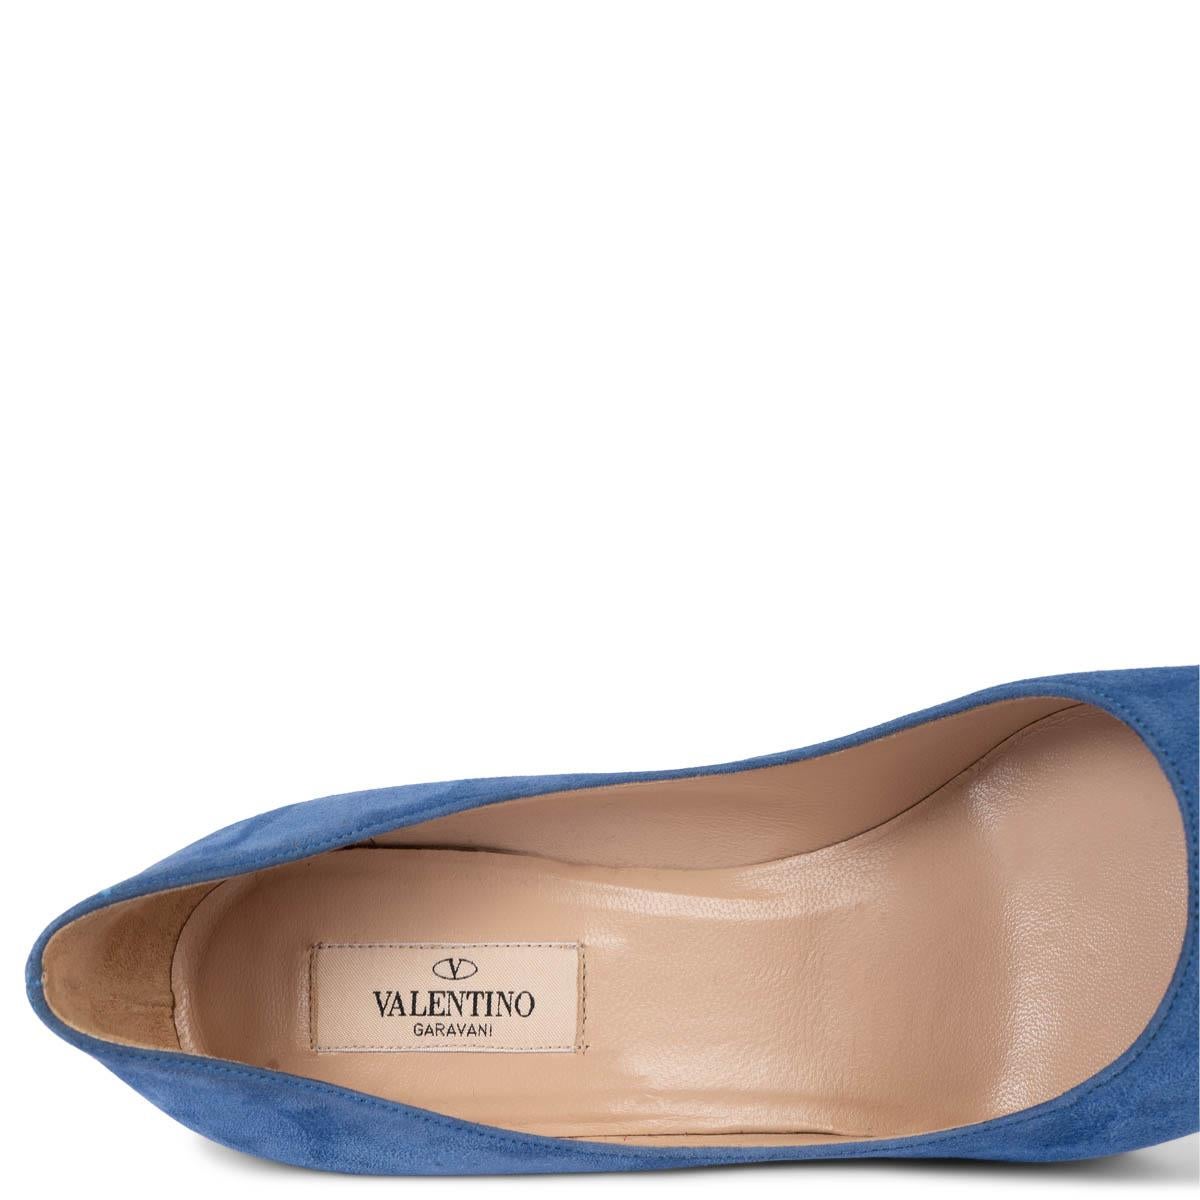 VALENTINO sky blue suede Platform Pumps Shoes 37 For Sale 2